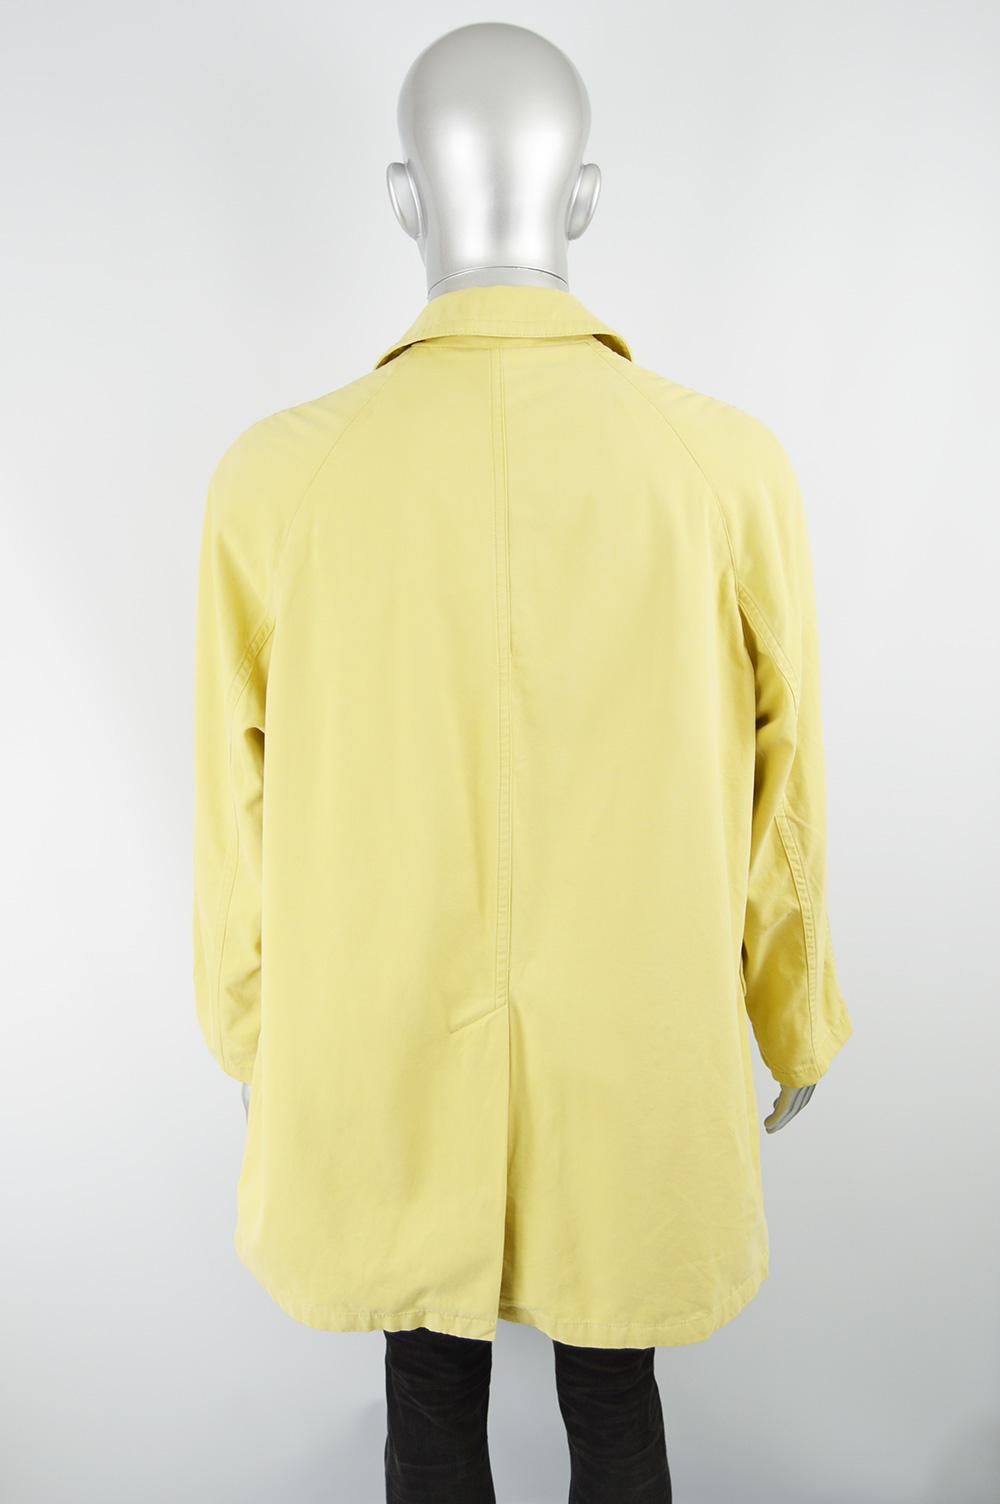 Valentino Men's Vintage 1980s Pastel Yellow Cotton Jacket Coat, 1980s 2